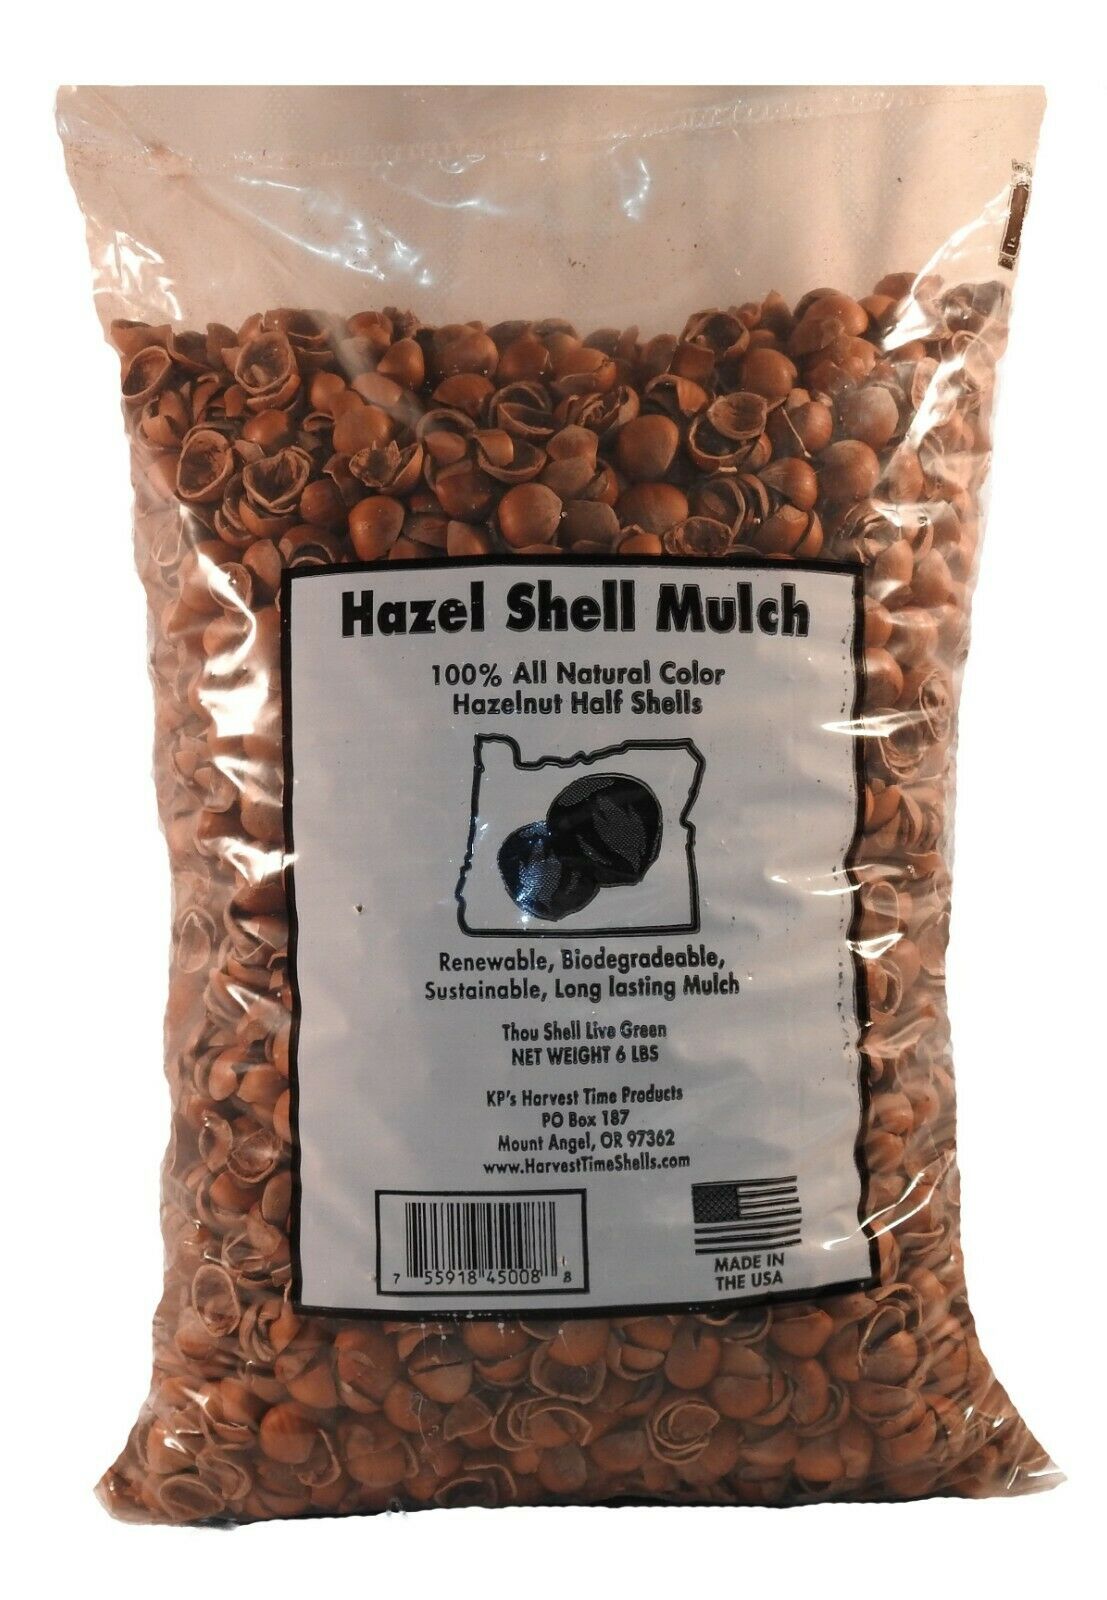 Hazel Shell Mulch - Amendment Product - 6 Lbs.